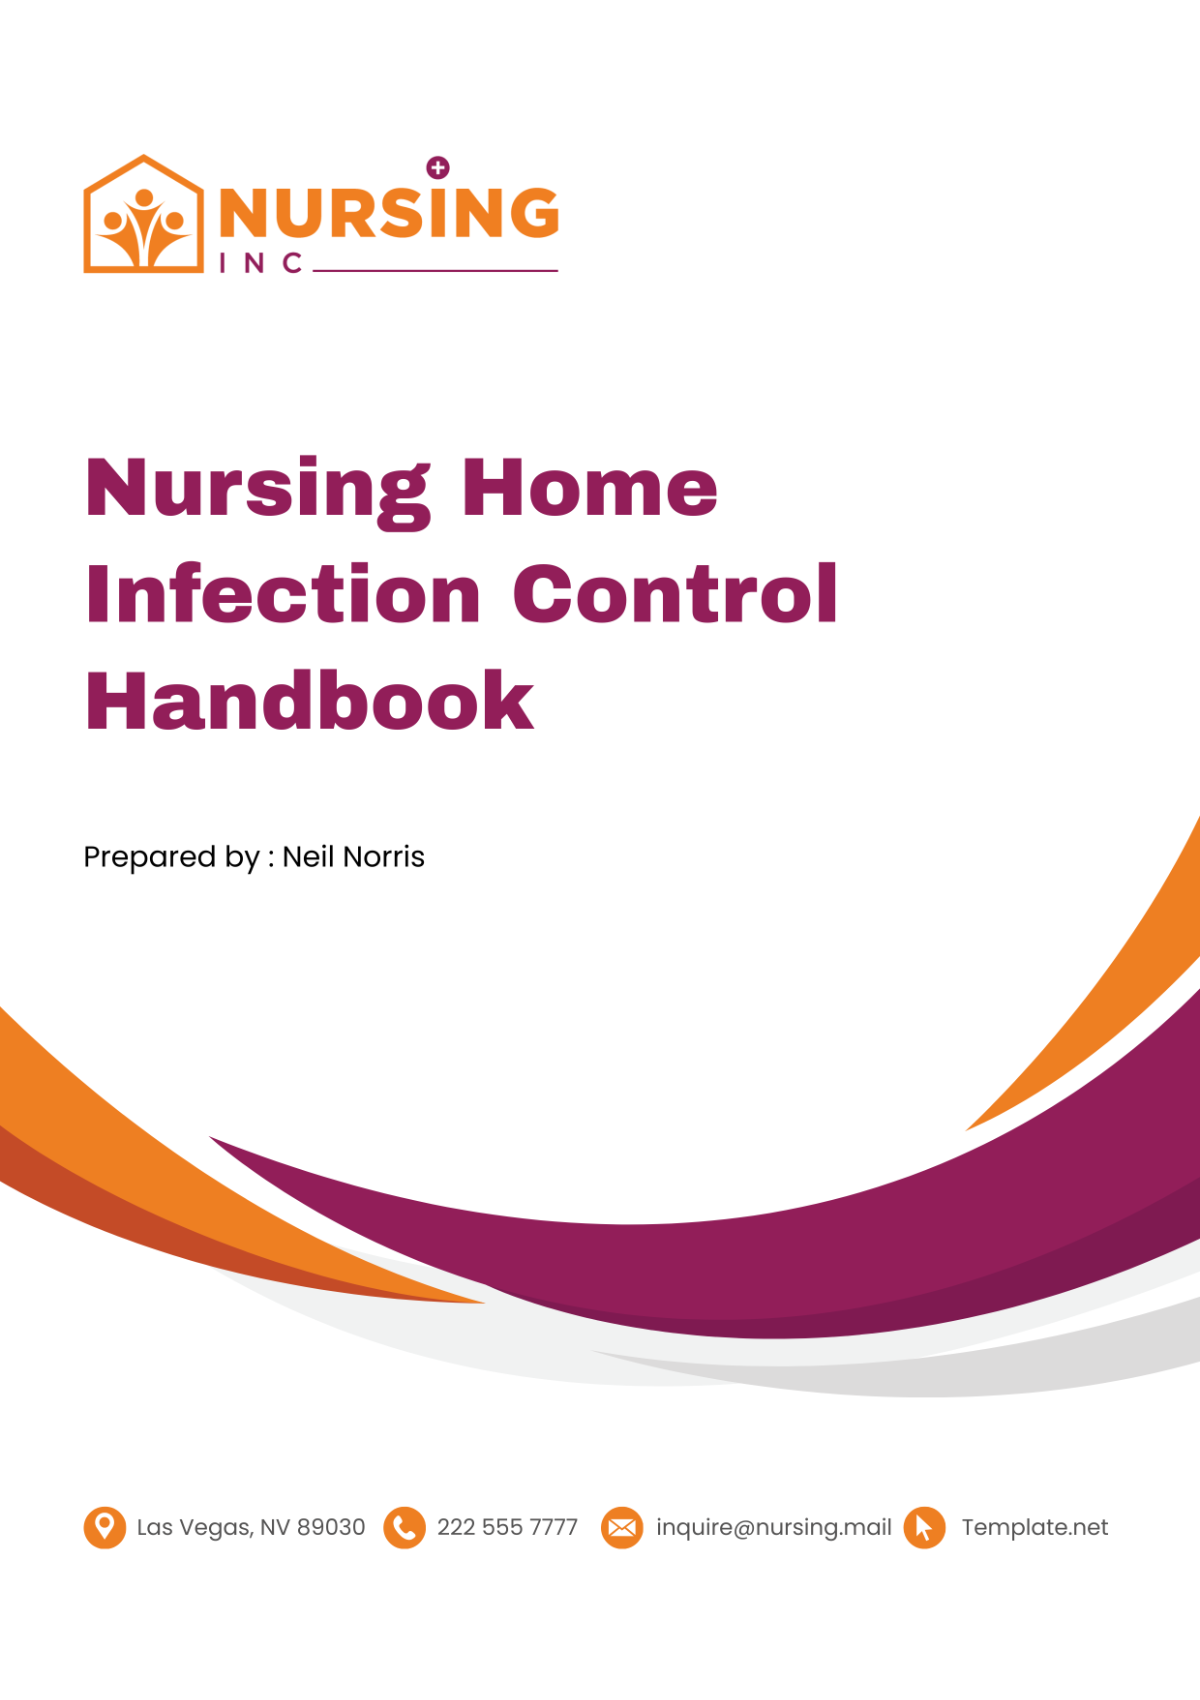 Nursing Home Infection Control Handbook Template